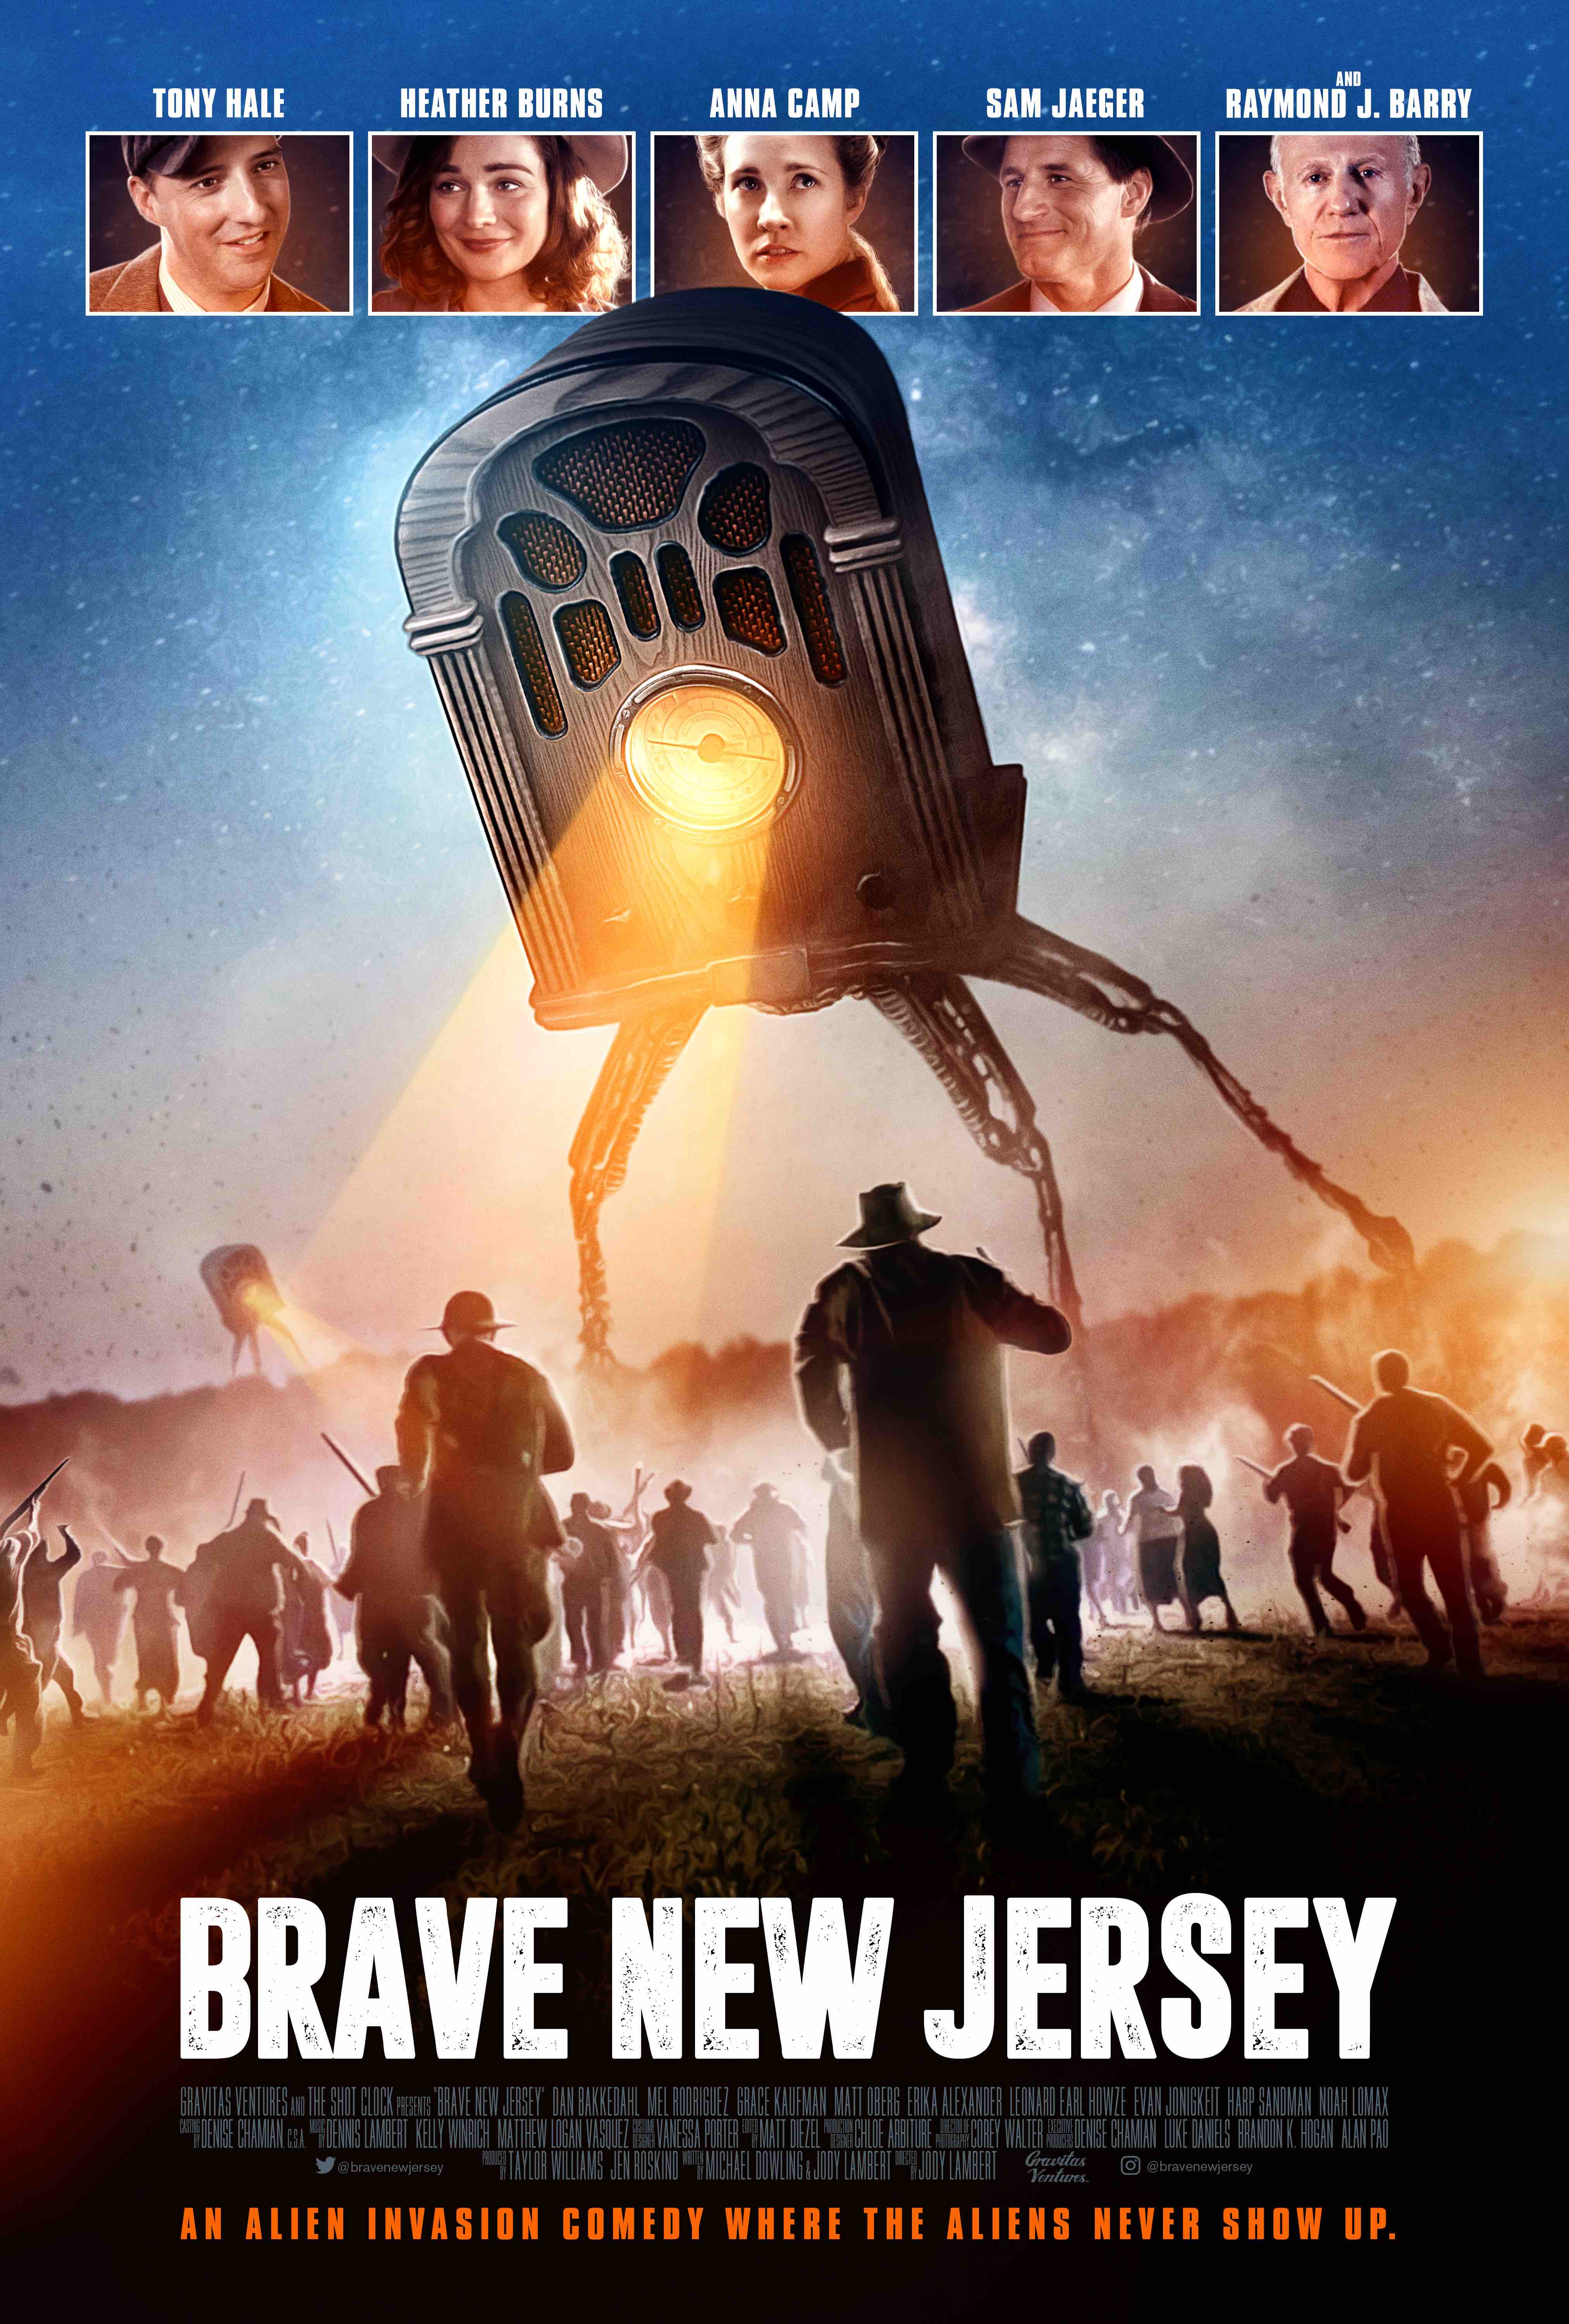 Nonton film Brave New Jersey layarkaca21 indoxx1 ganool online streaming terbaru